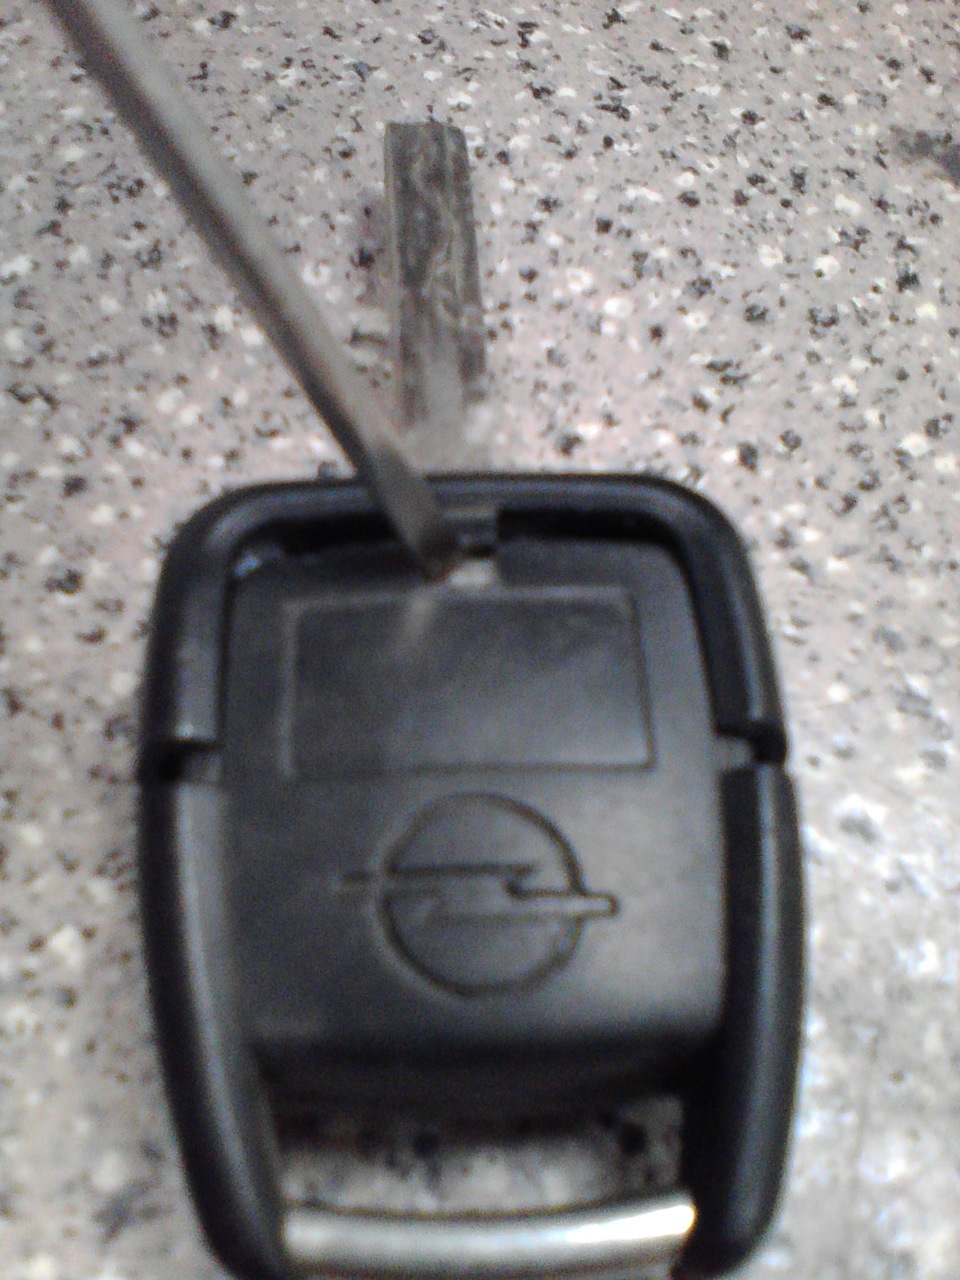 Ключ вектра б. Ключ Опель Вектра с 2002 года. Ключ Опель Вектра б 1999-2003. Ключ Opel Vectra b 1999. Ключ Опель Вектра б 1999.